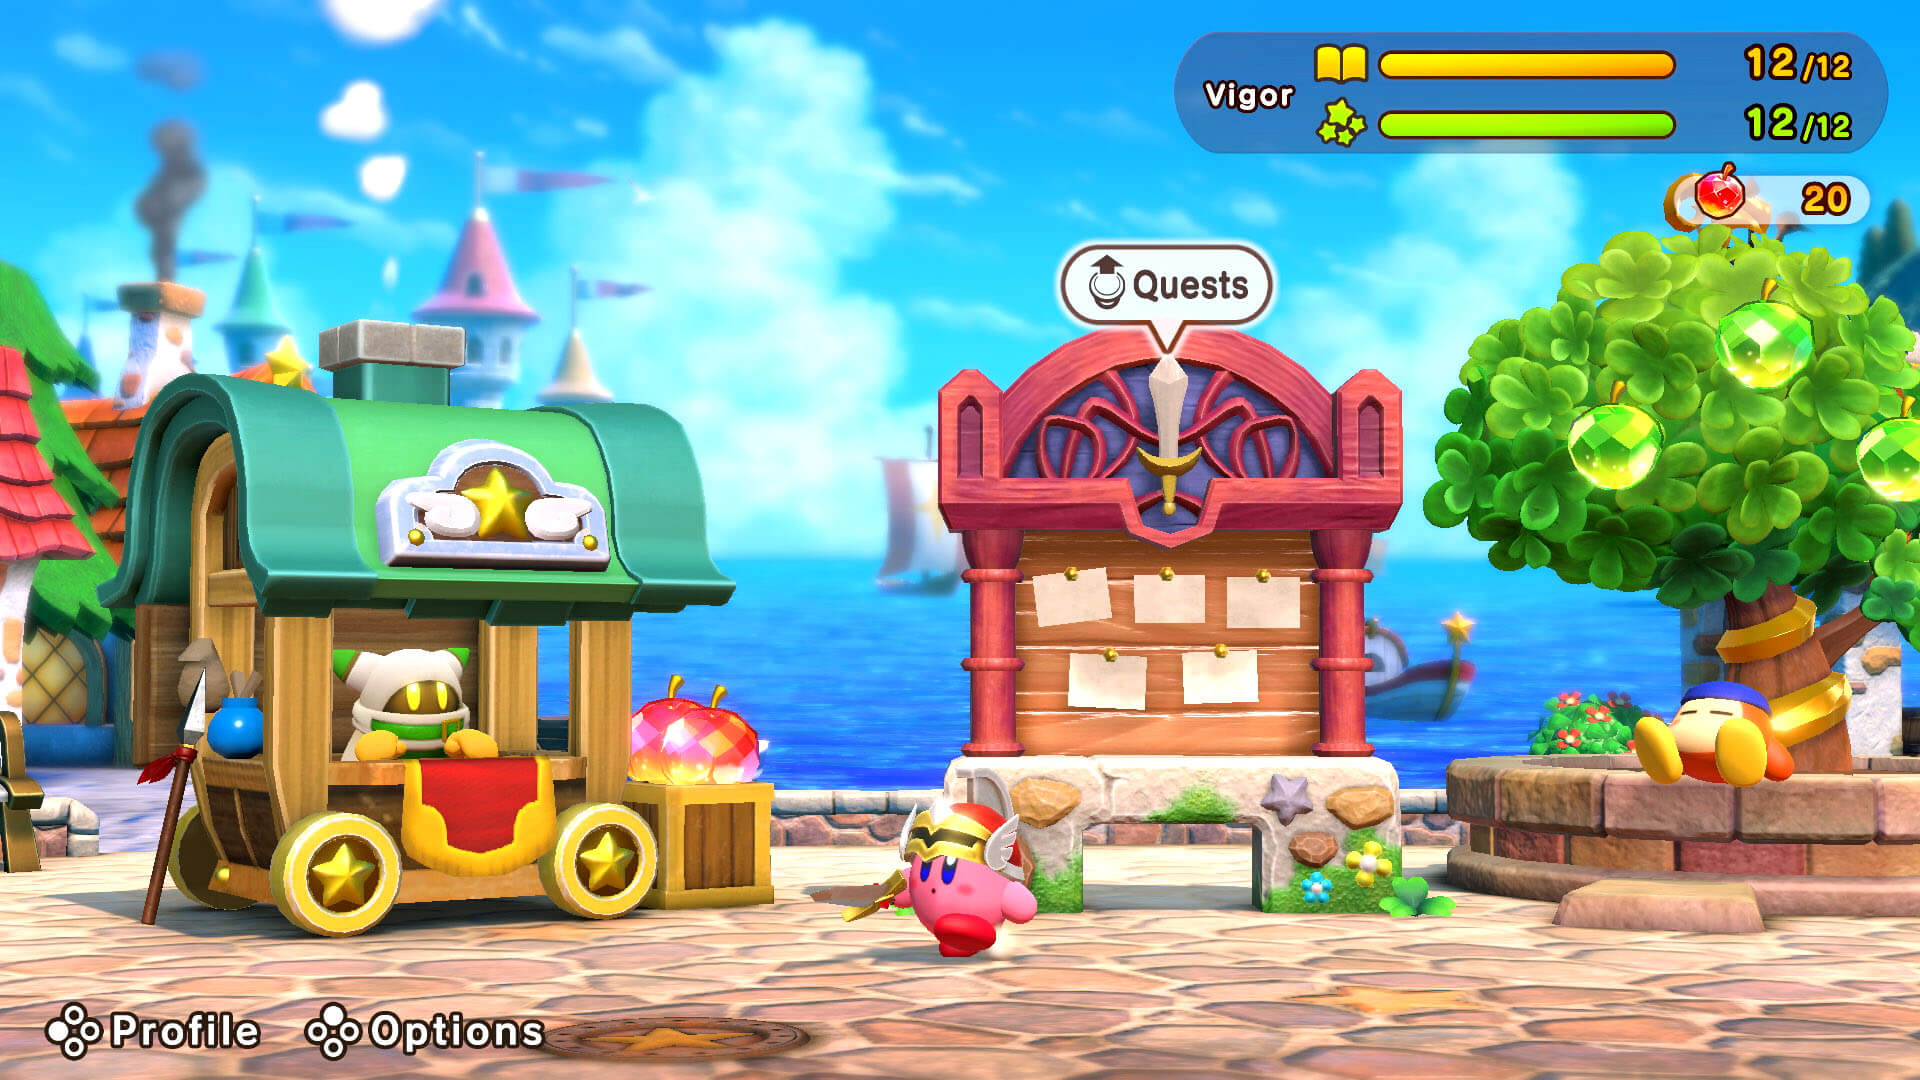 Super Kirby Clash Nintendo Switch